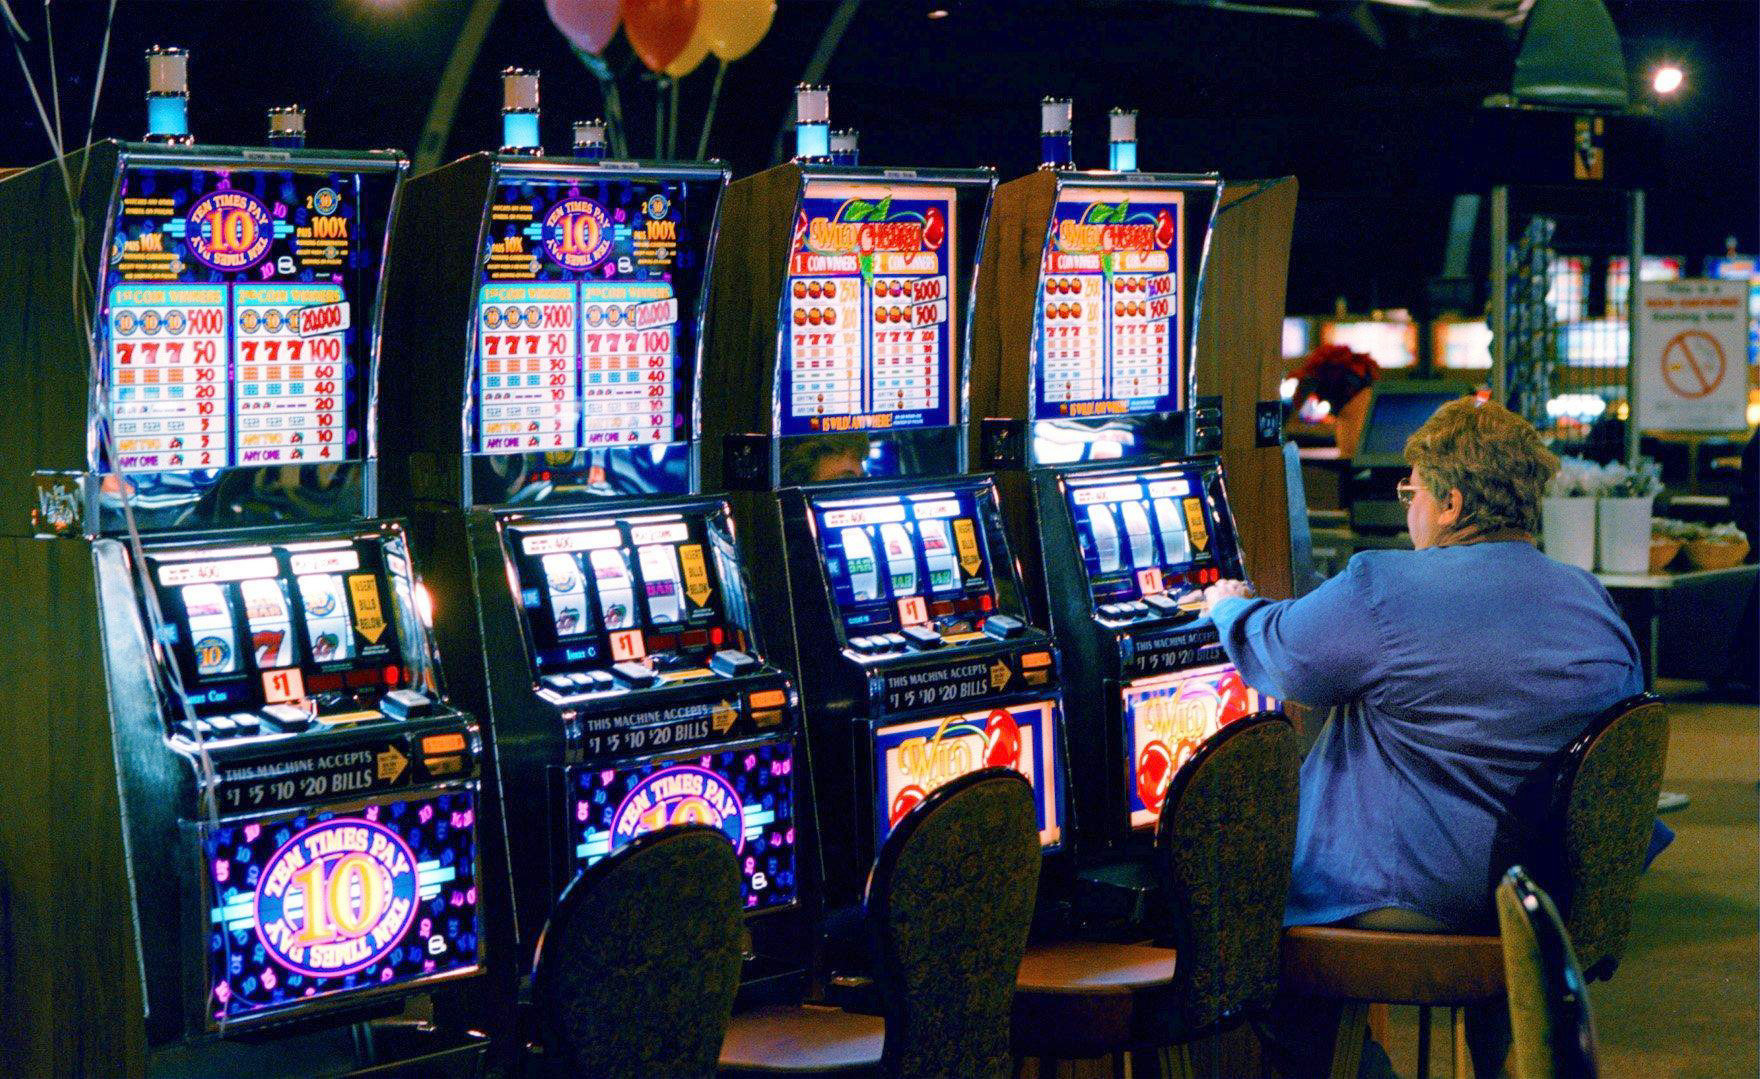 Casino gambling still a poor bet for Atlanta, Georgia